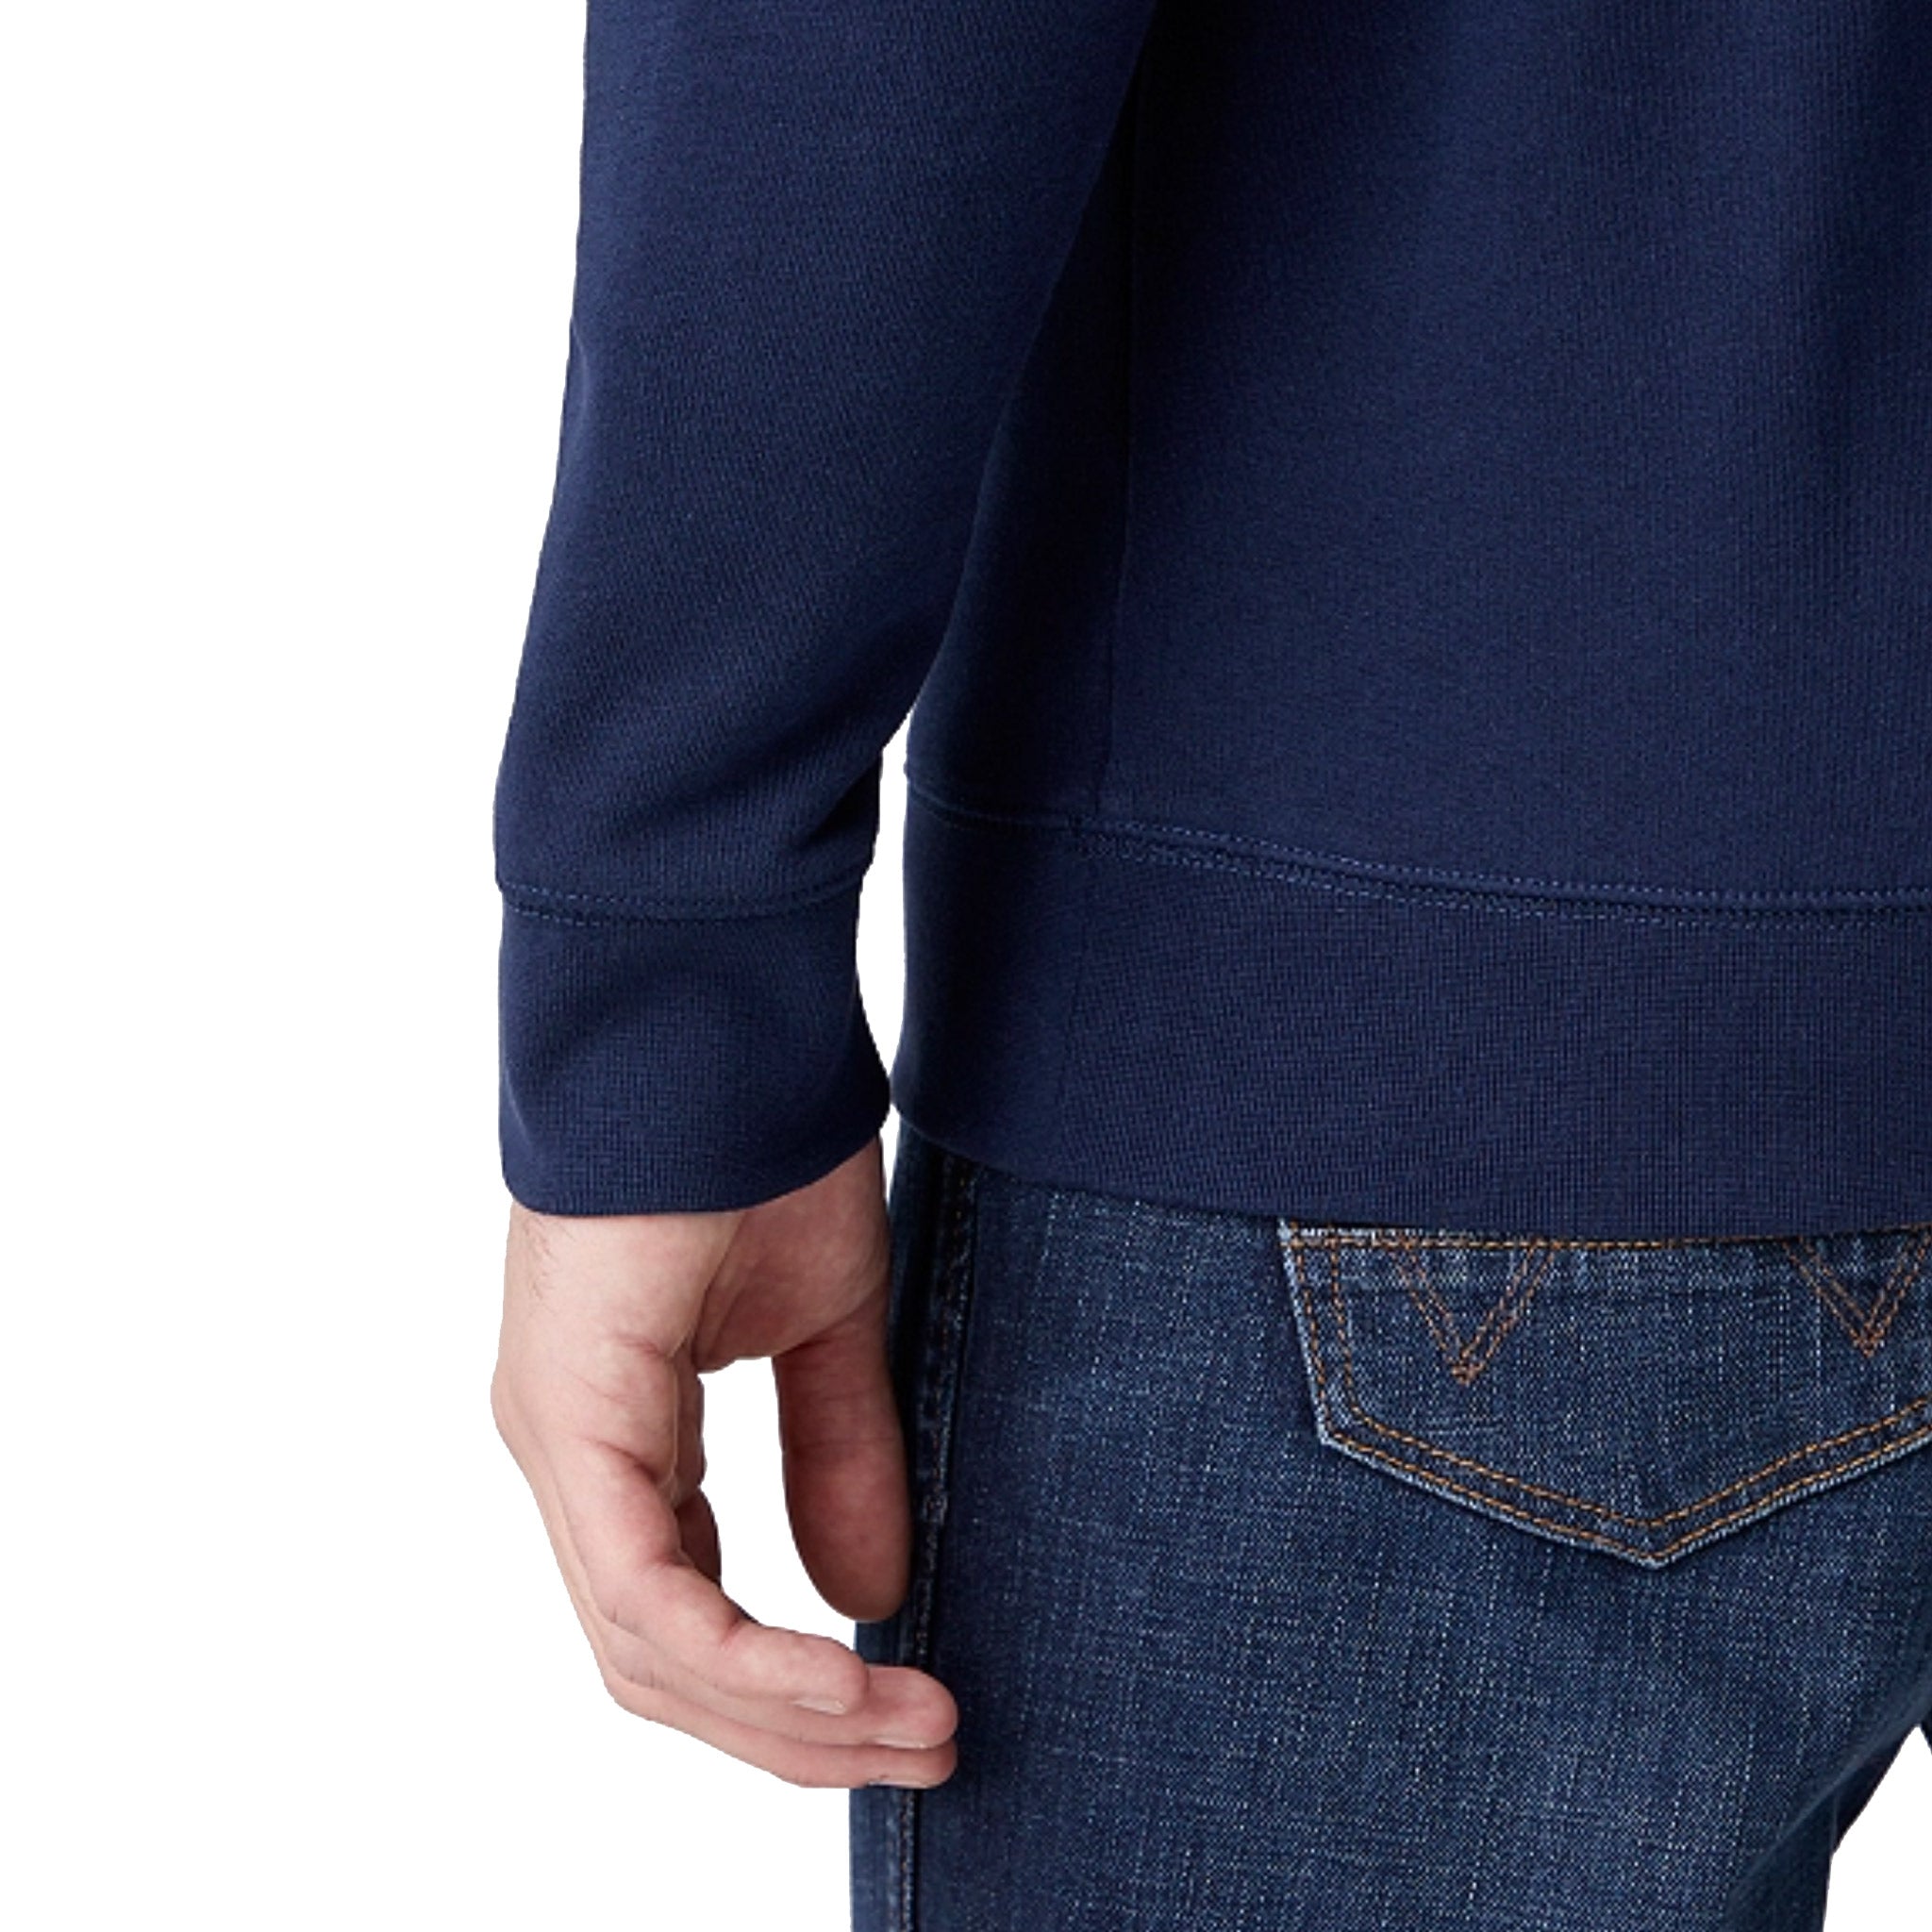 Wrangler Sign Off Sweatshirt in Navy Worn By Model Showing Sleeve & Cuff Detail